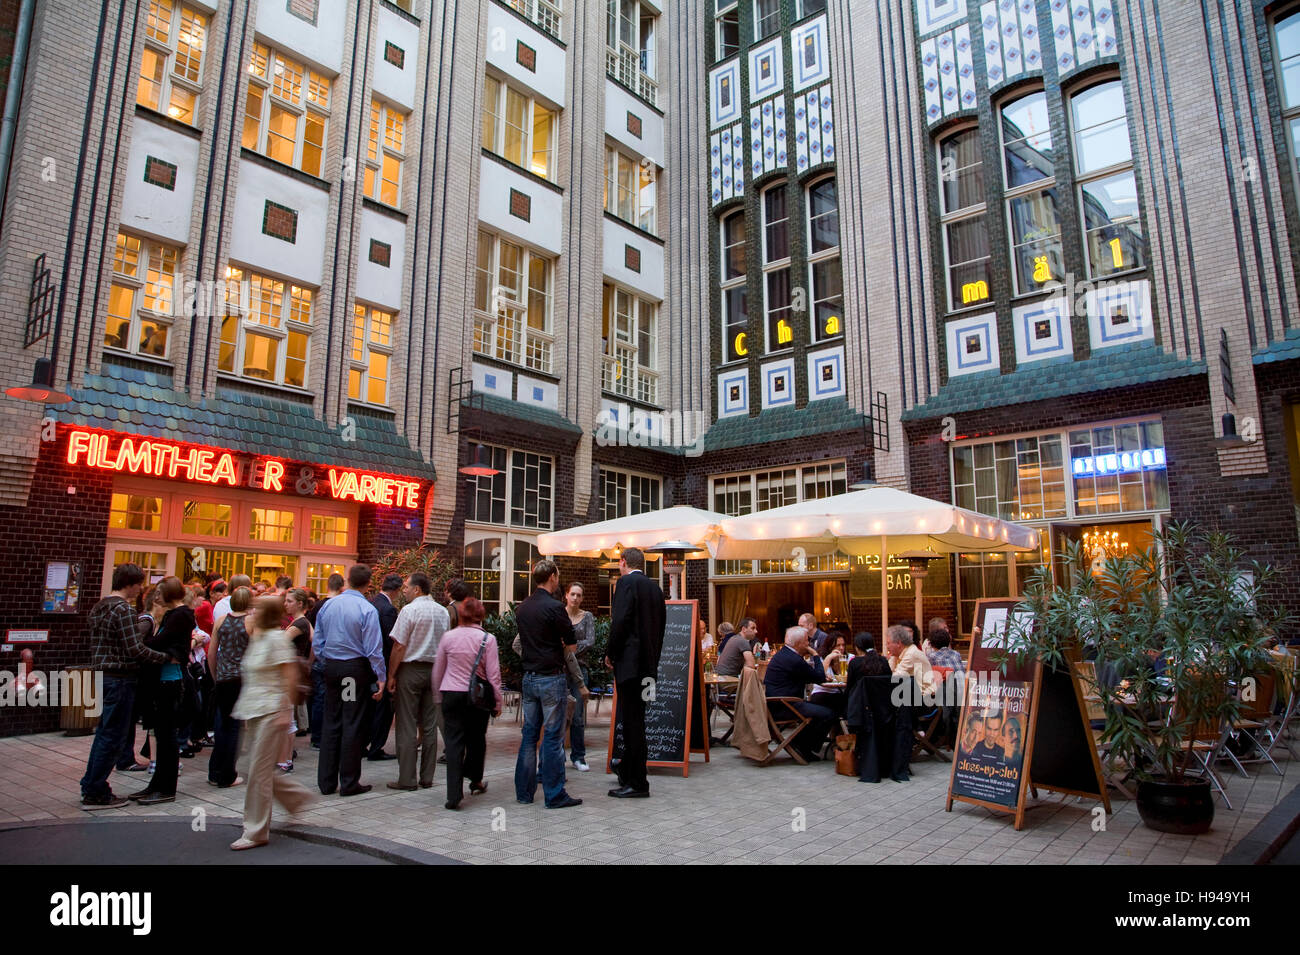 Menschen vor Restaurant, Kino, Varieté, Hackesche Hoefe, Berlin, Deutschland Stockfoto